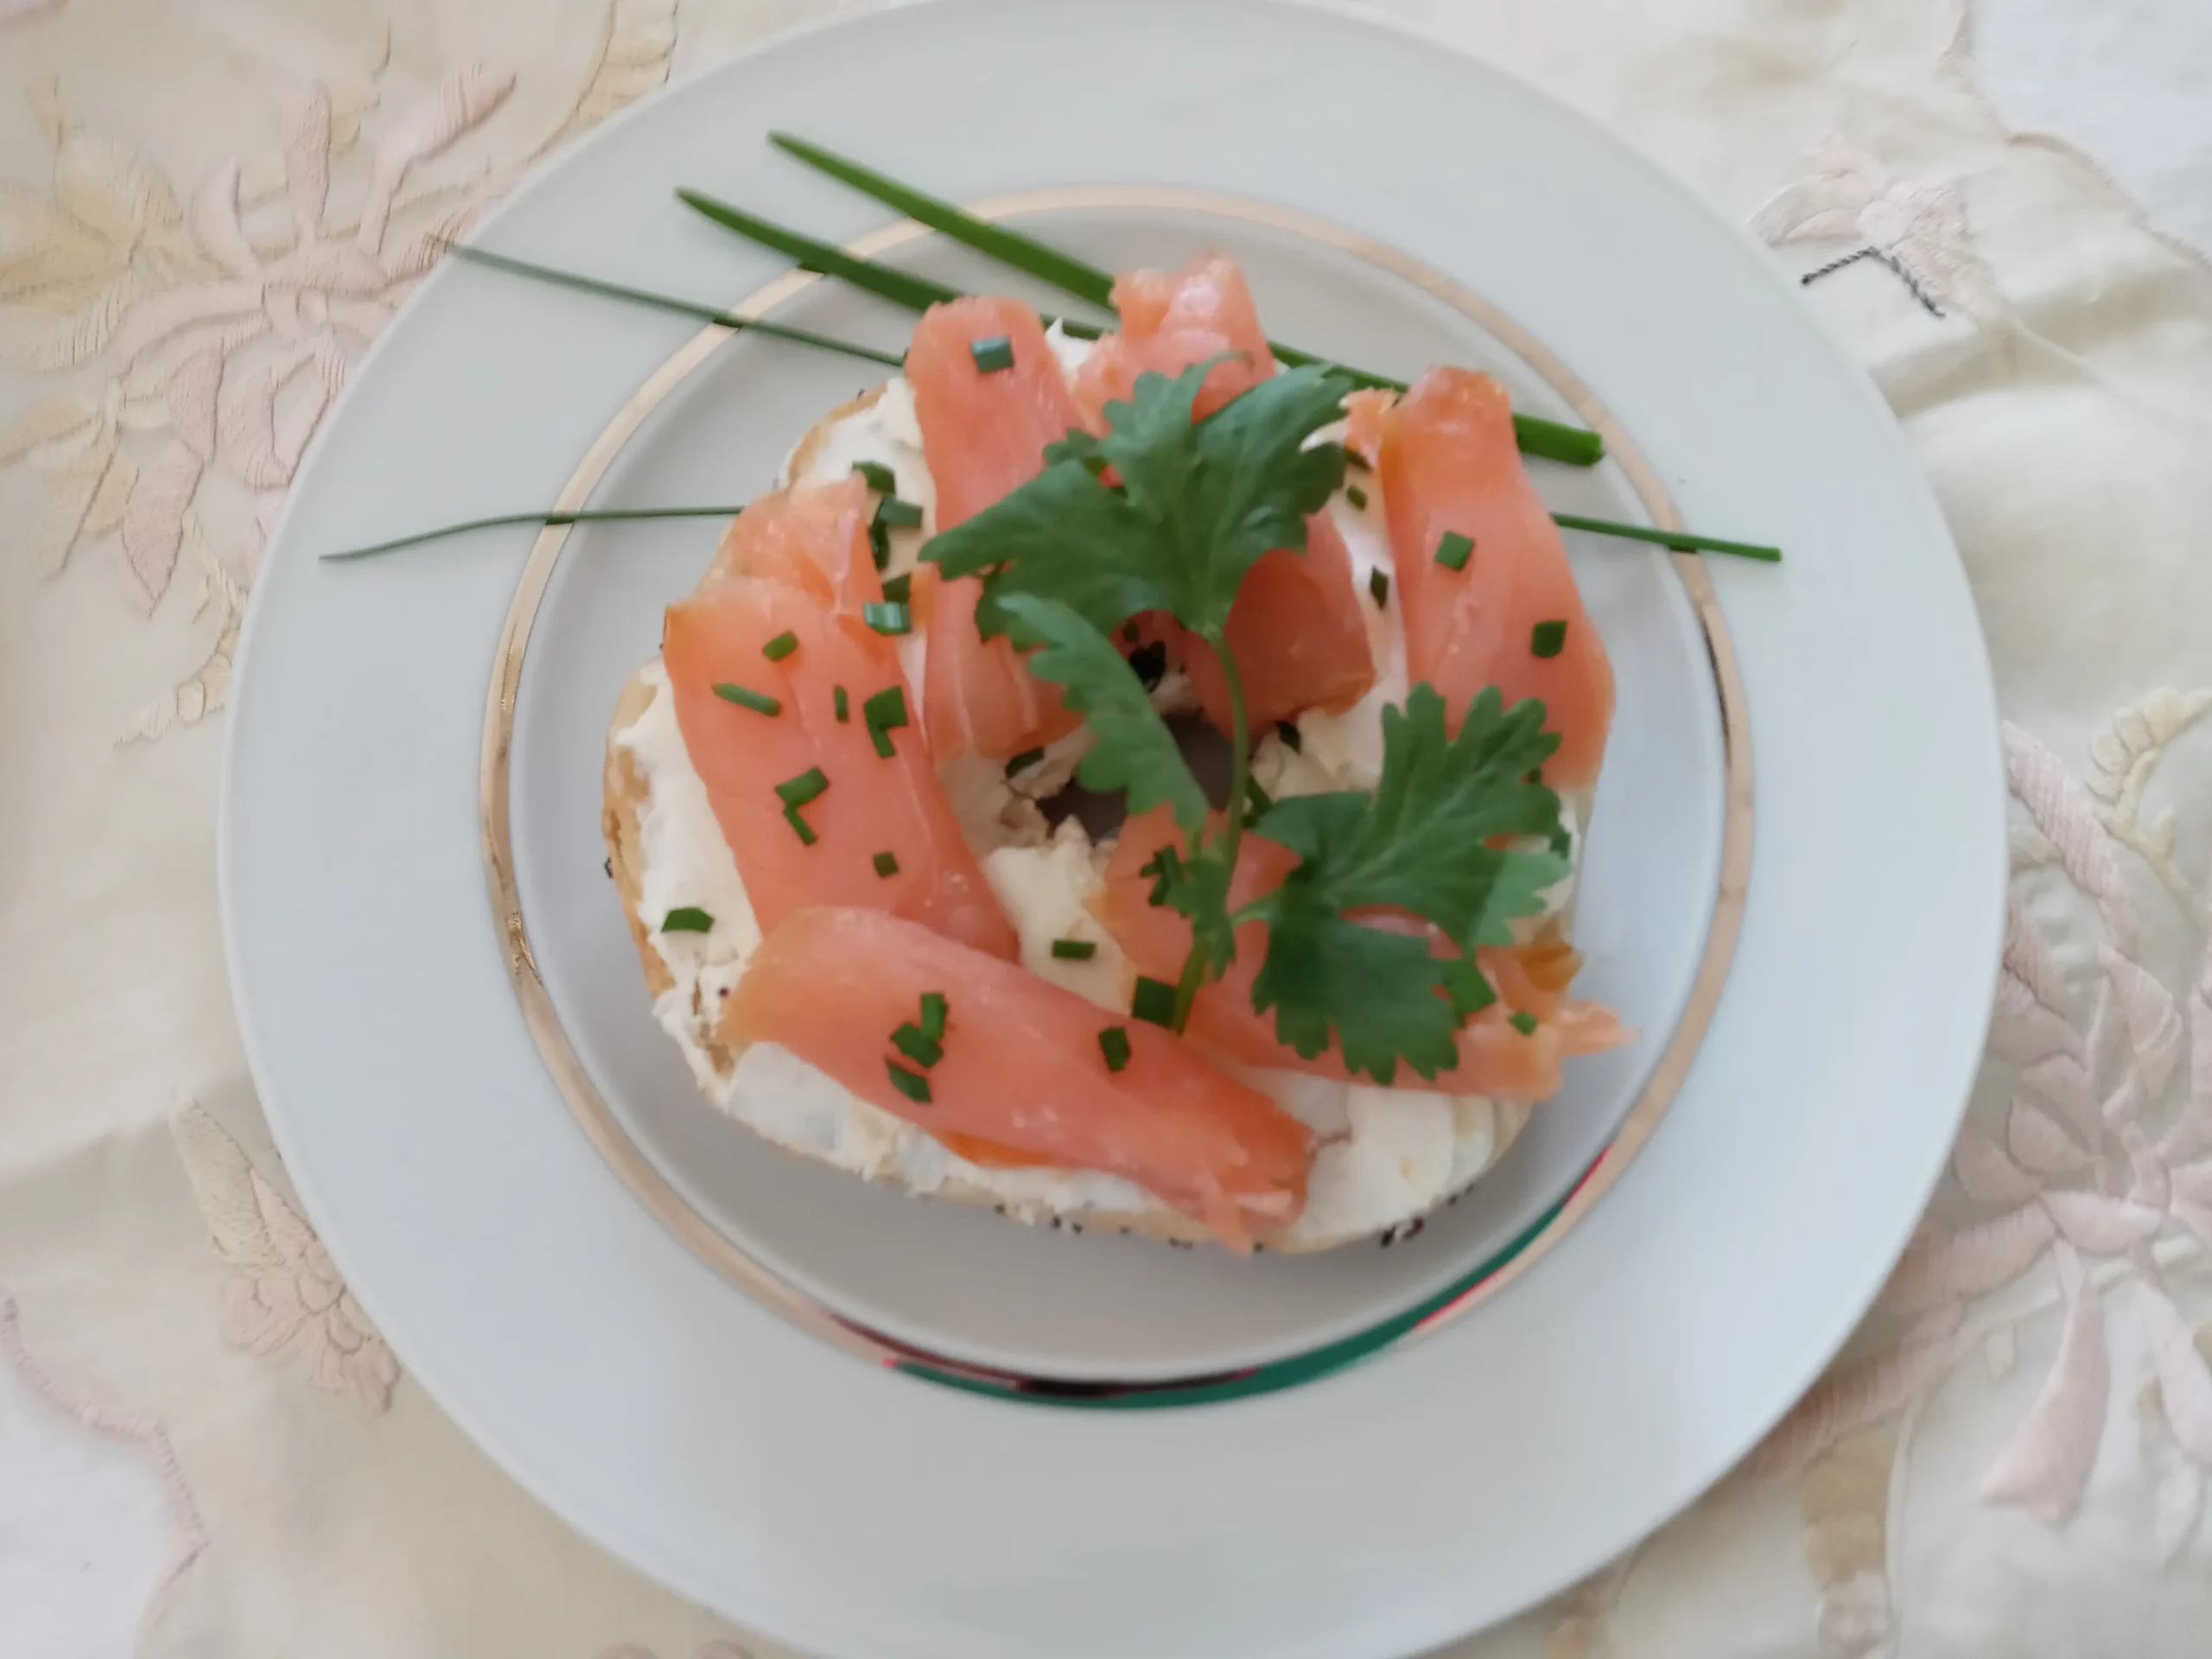 norwegian smoked salmon sandwich - What do Norwegians eat with smoked salmon